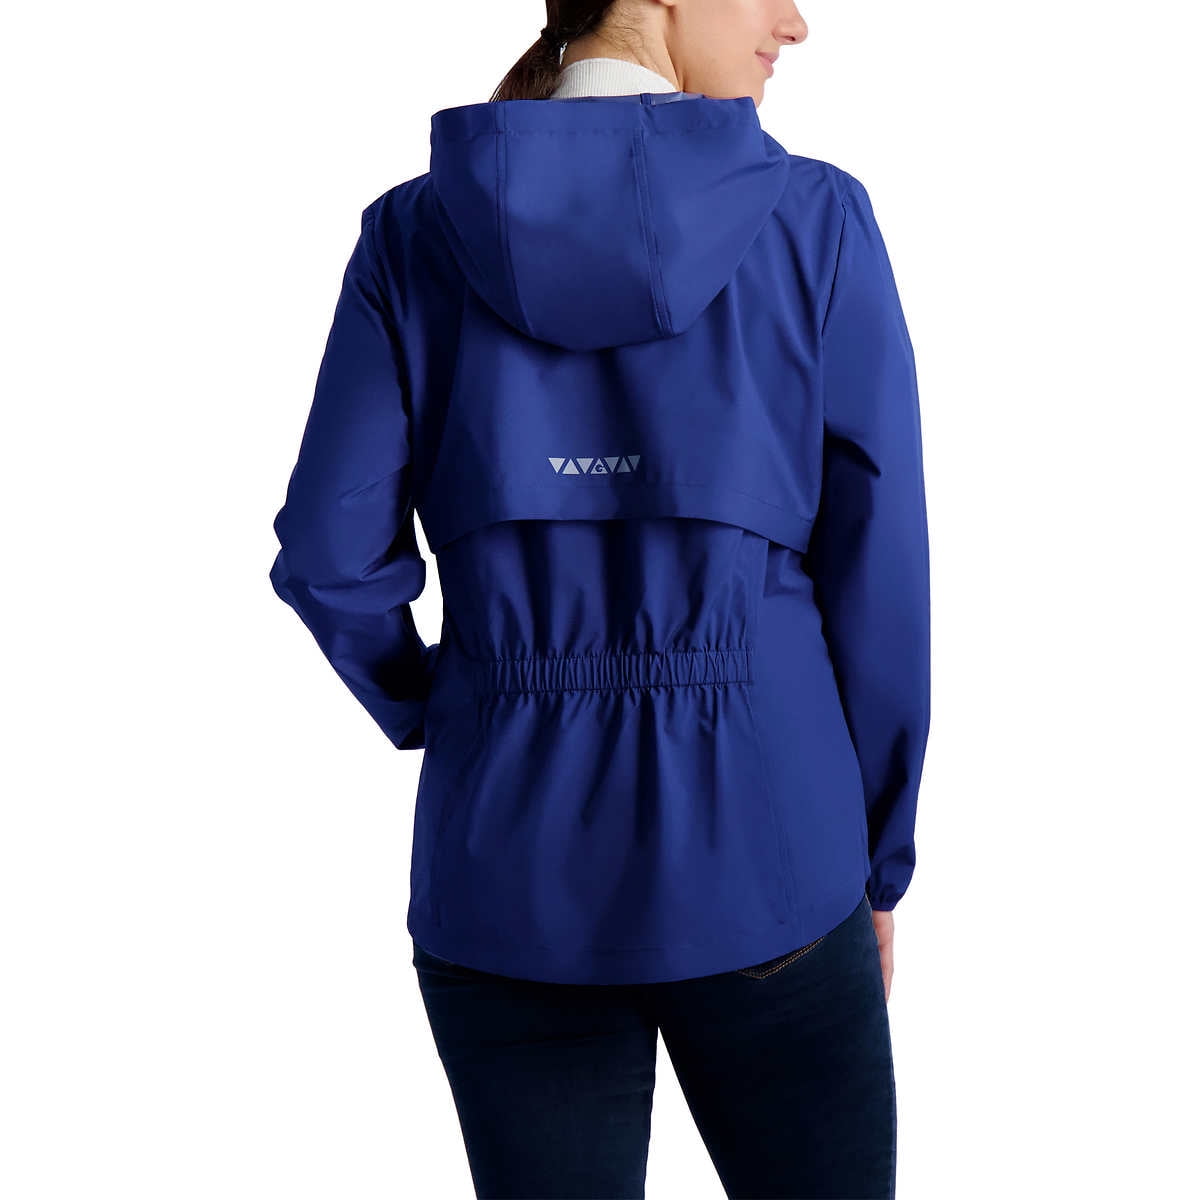 Gerry Ladies' Packable Rain Jacket Women's Rain Coat Bag Included